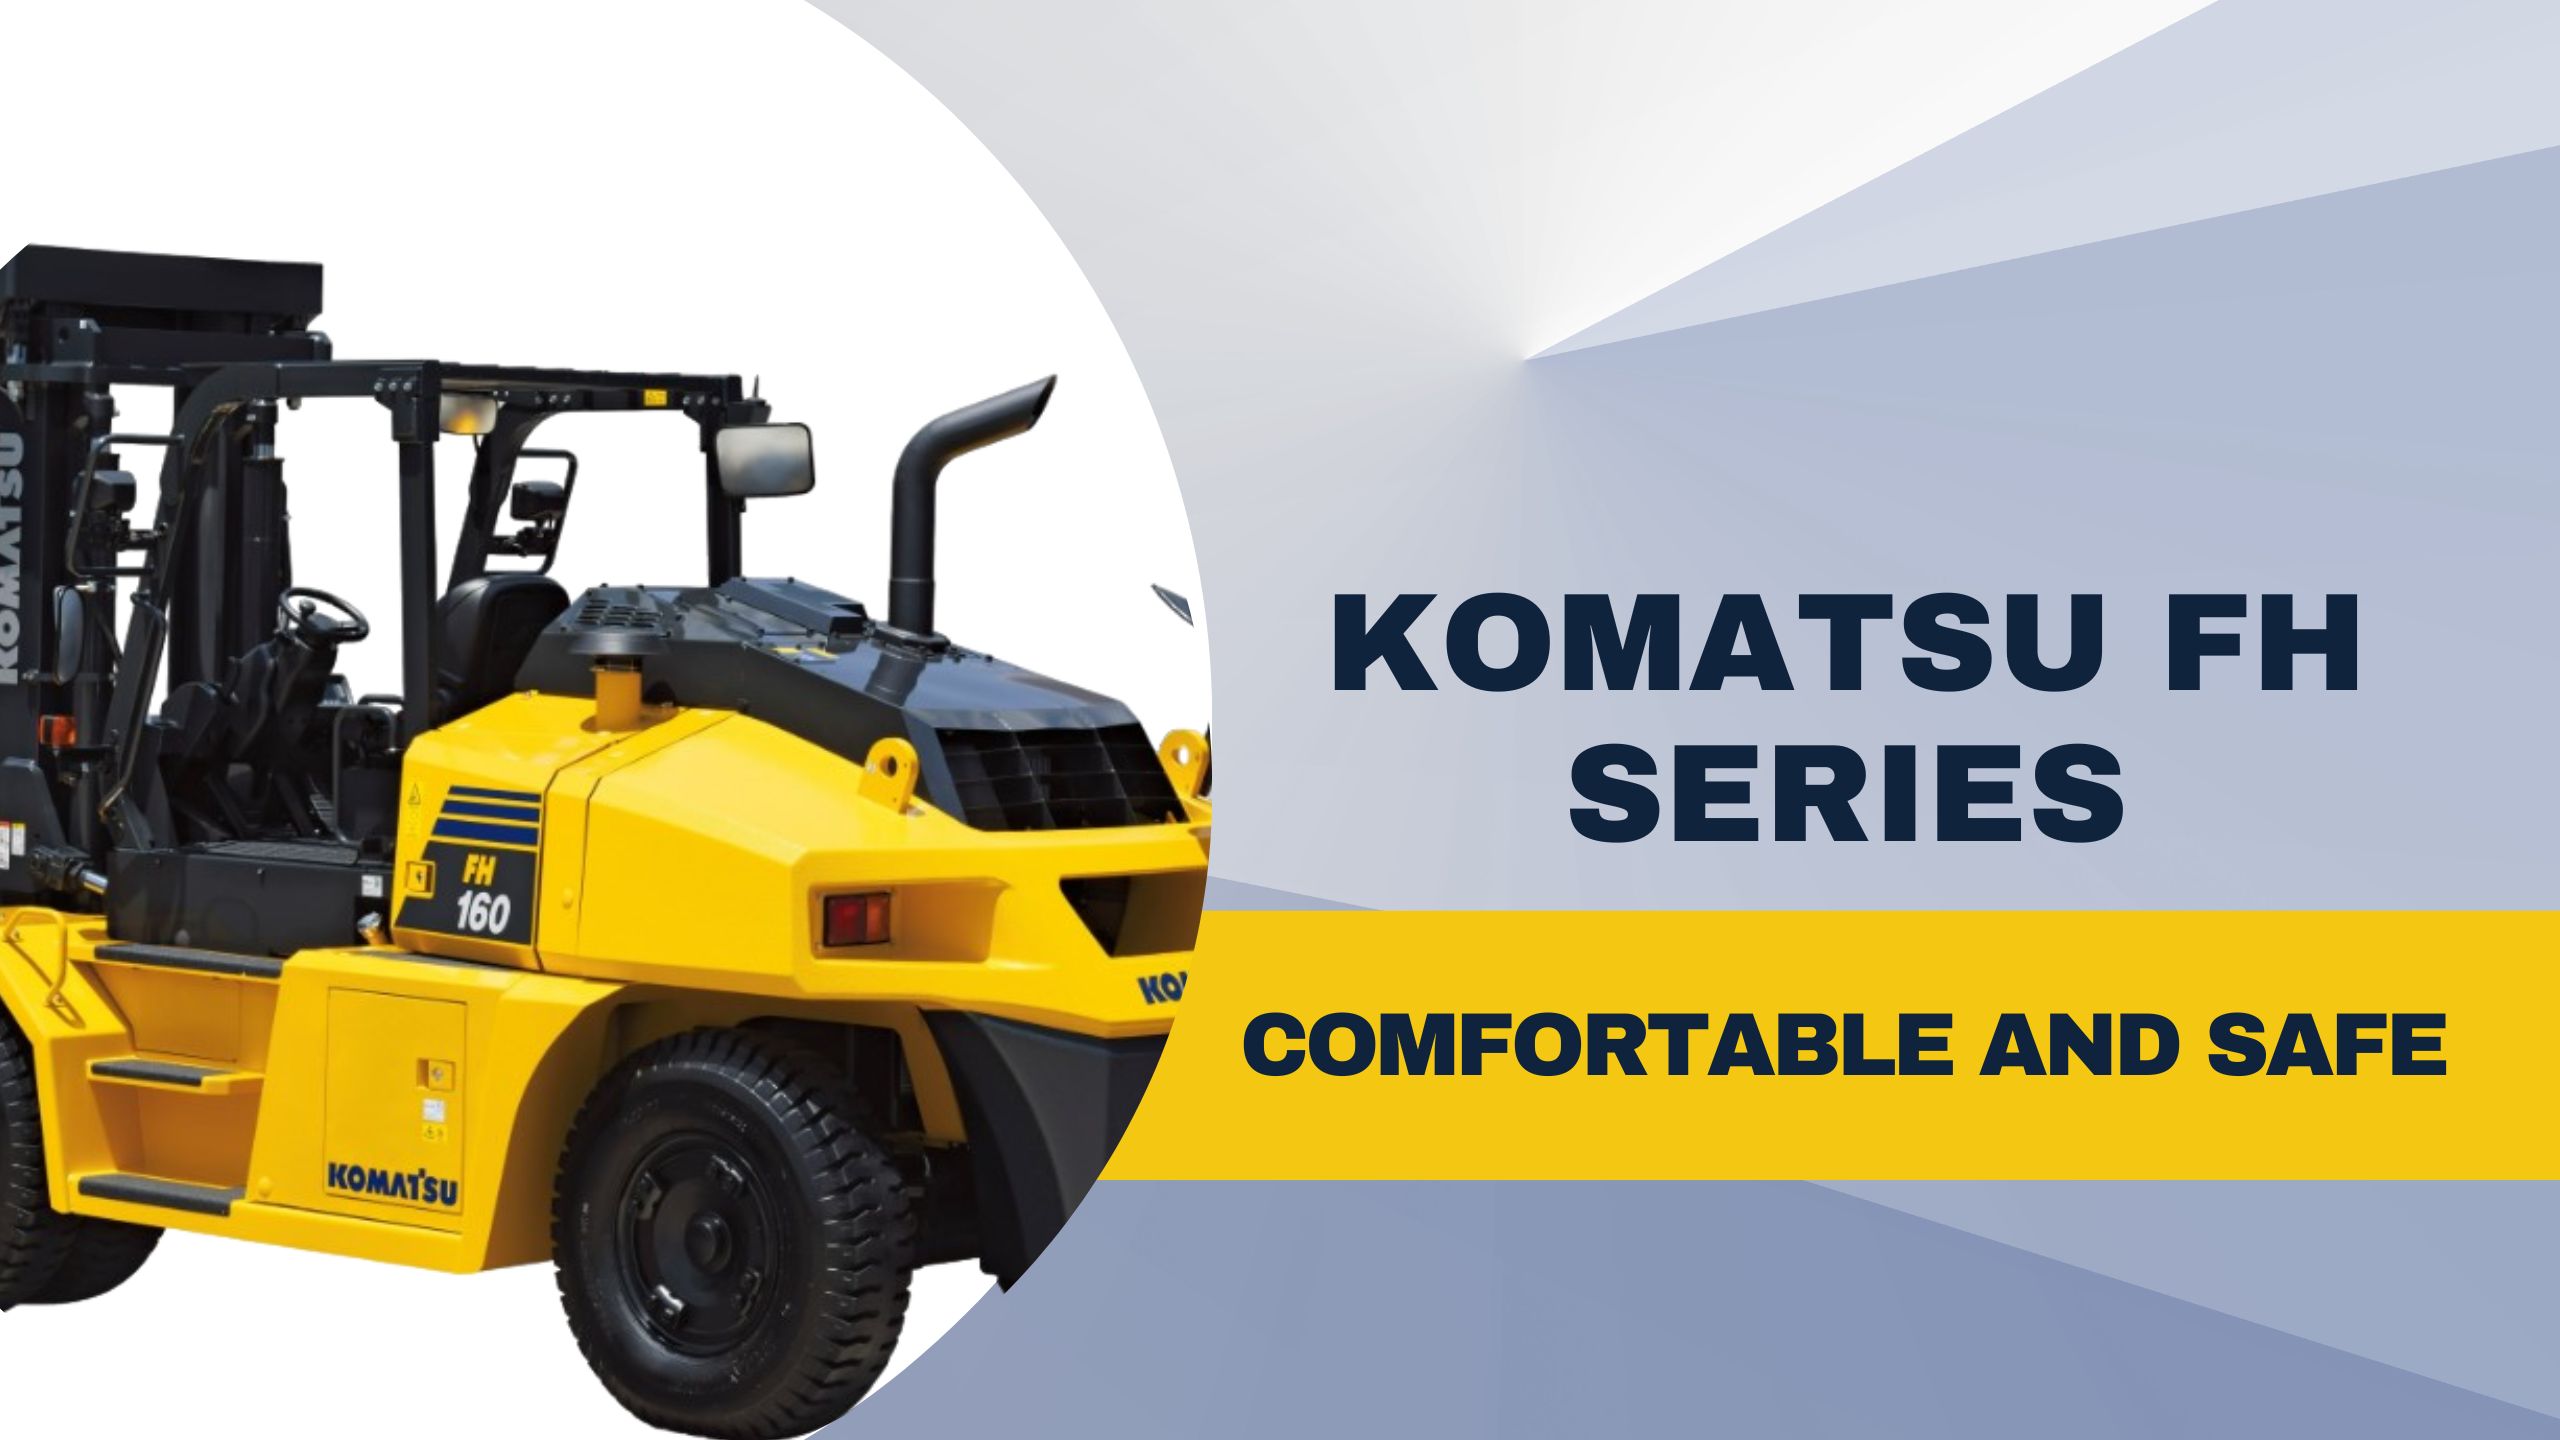 Komatsu Forklift FH Series Models – Comfortable and Safe